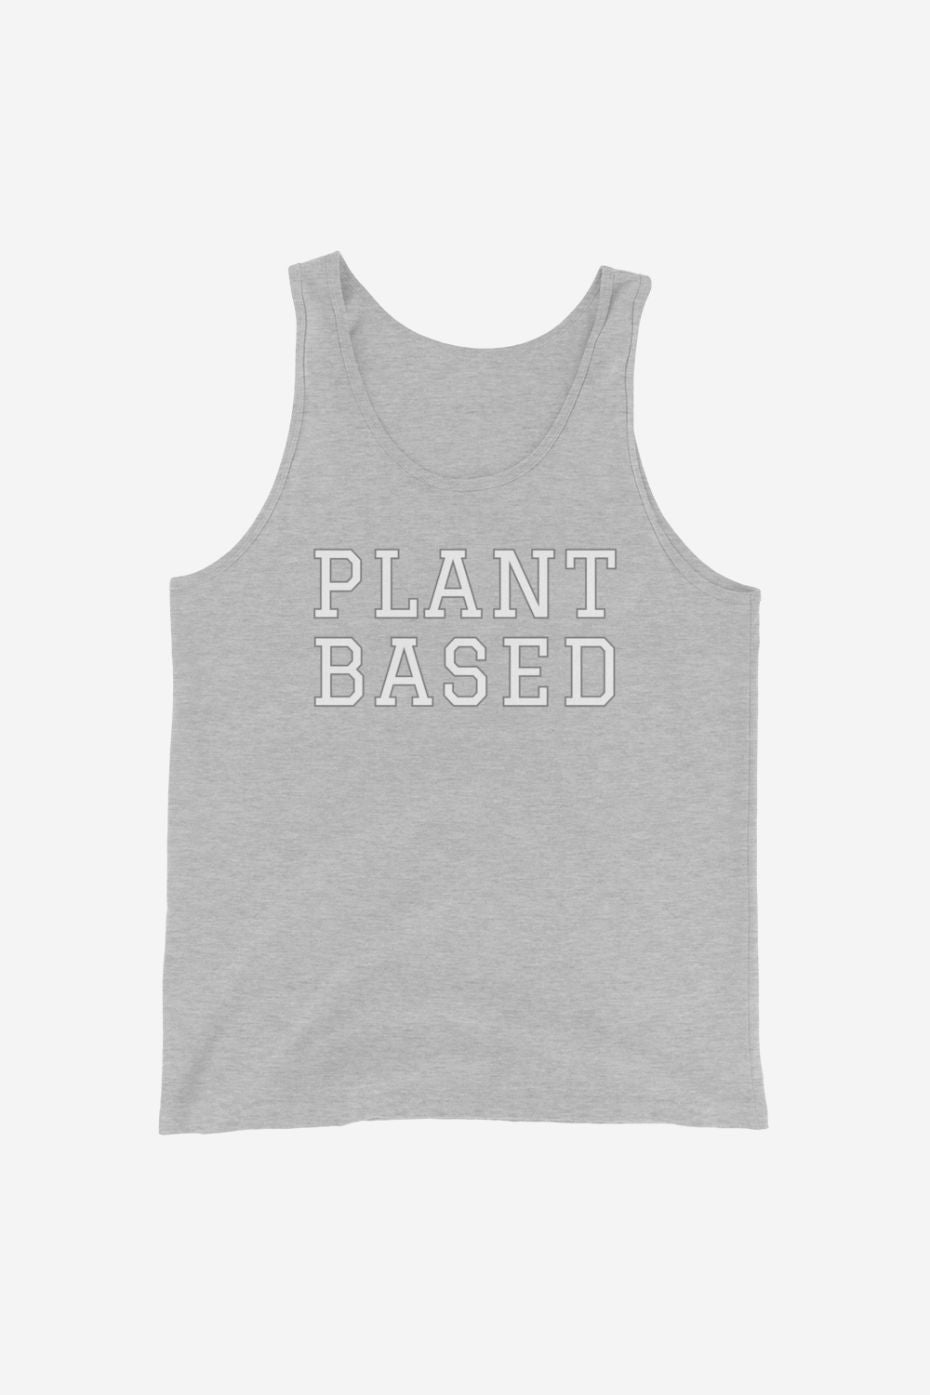 Plant Based - Unisex Tank Top